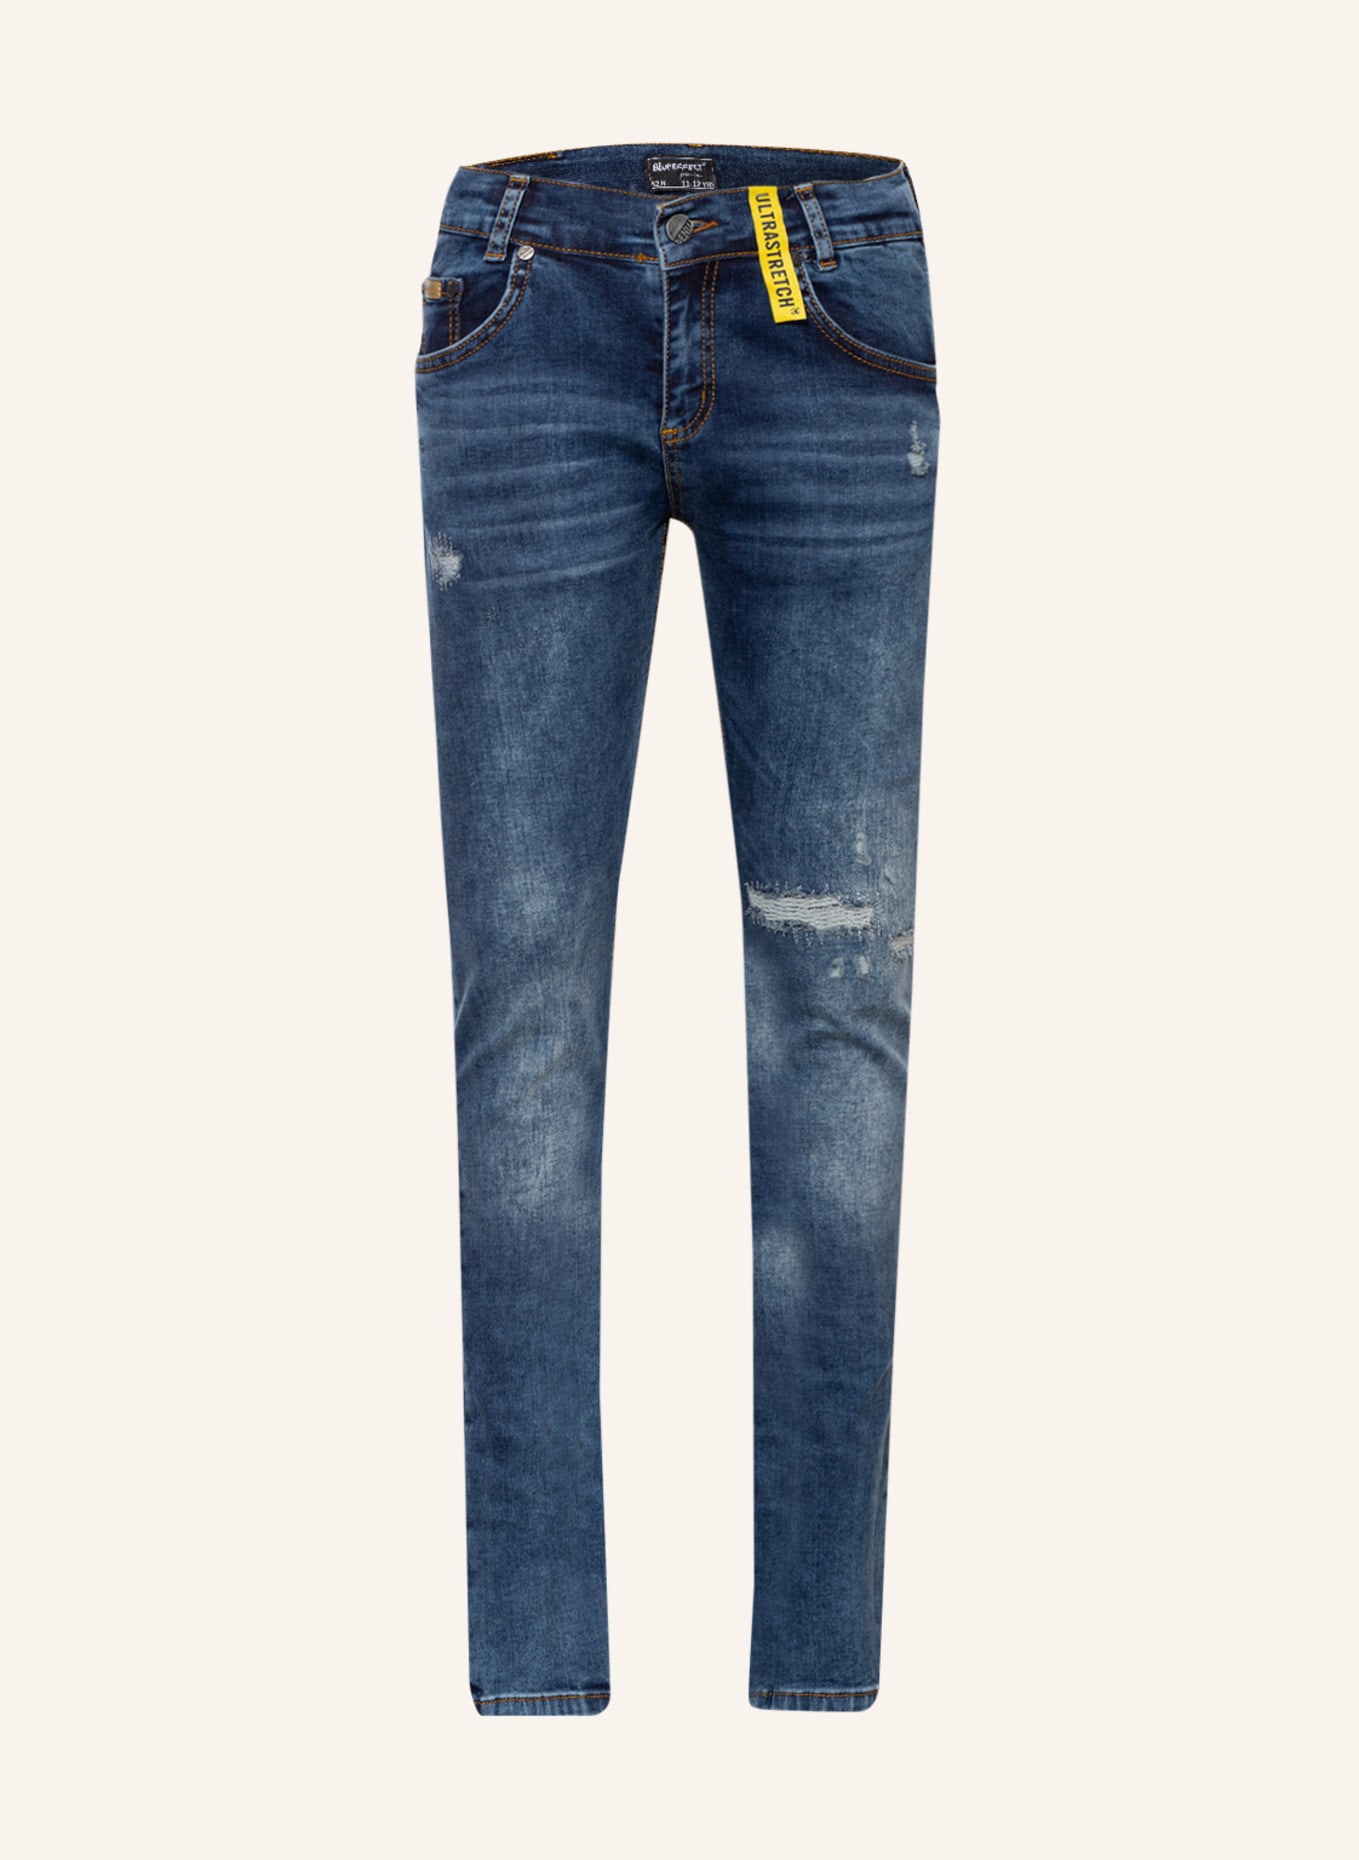 BLUE EFFECT Jeans Skinny Fit, Farbe: 9764 Dark Blue destr. (Bild 1)